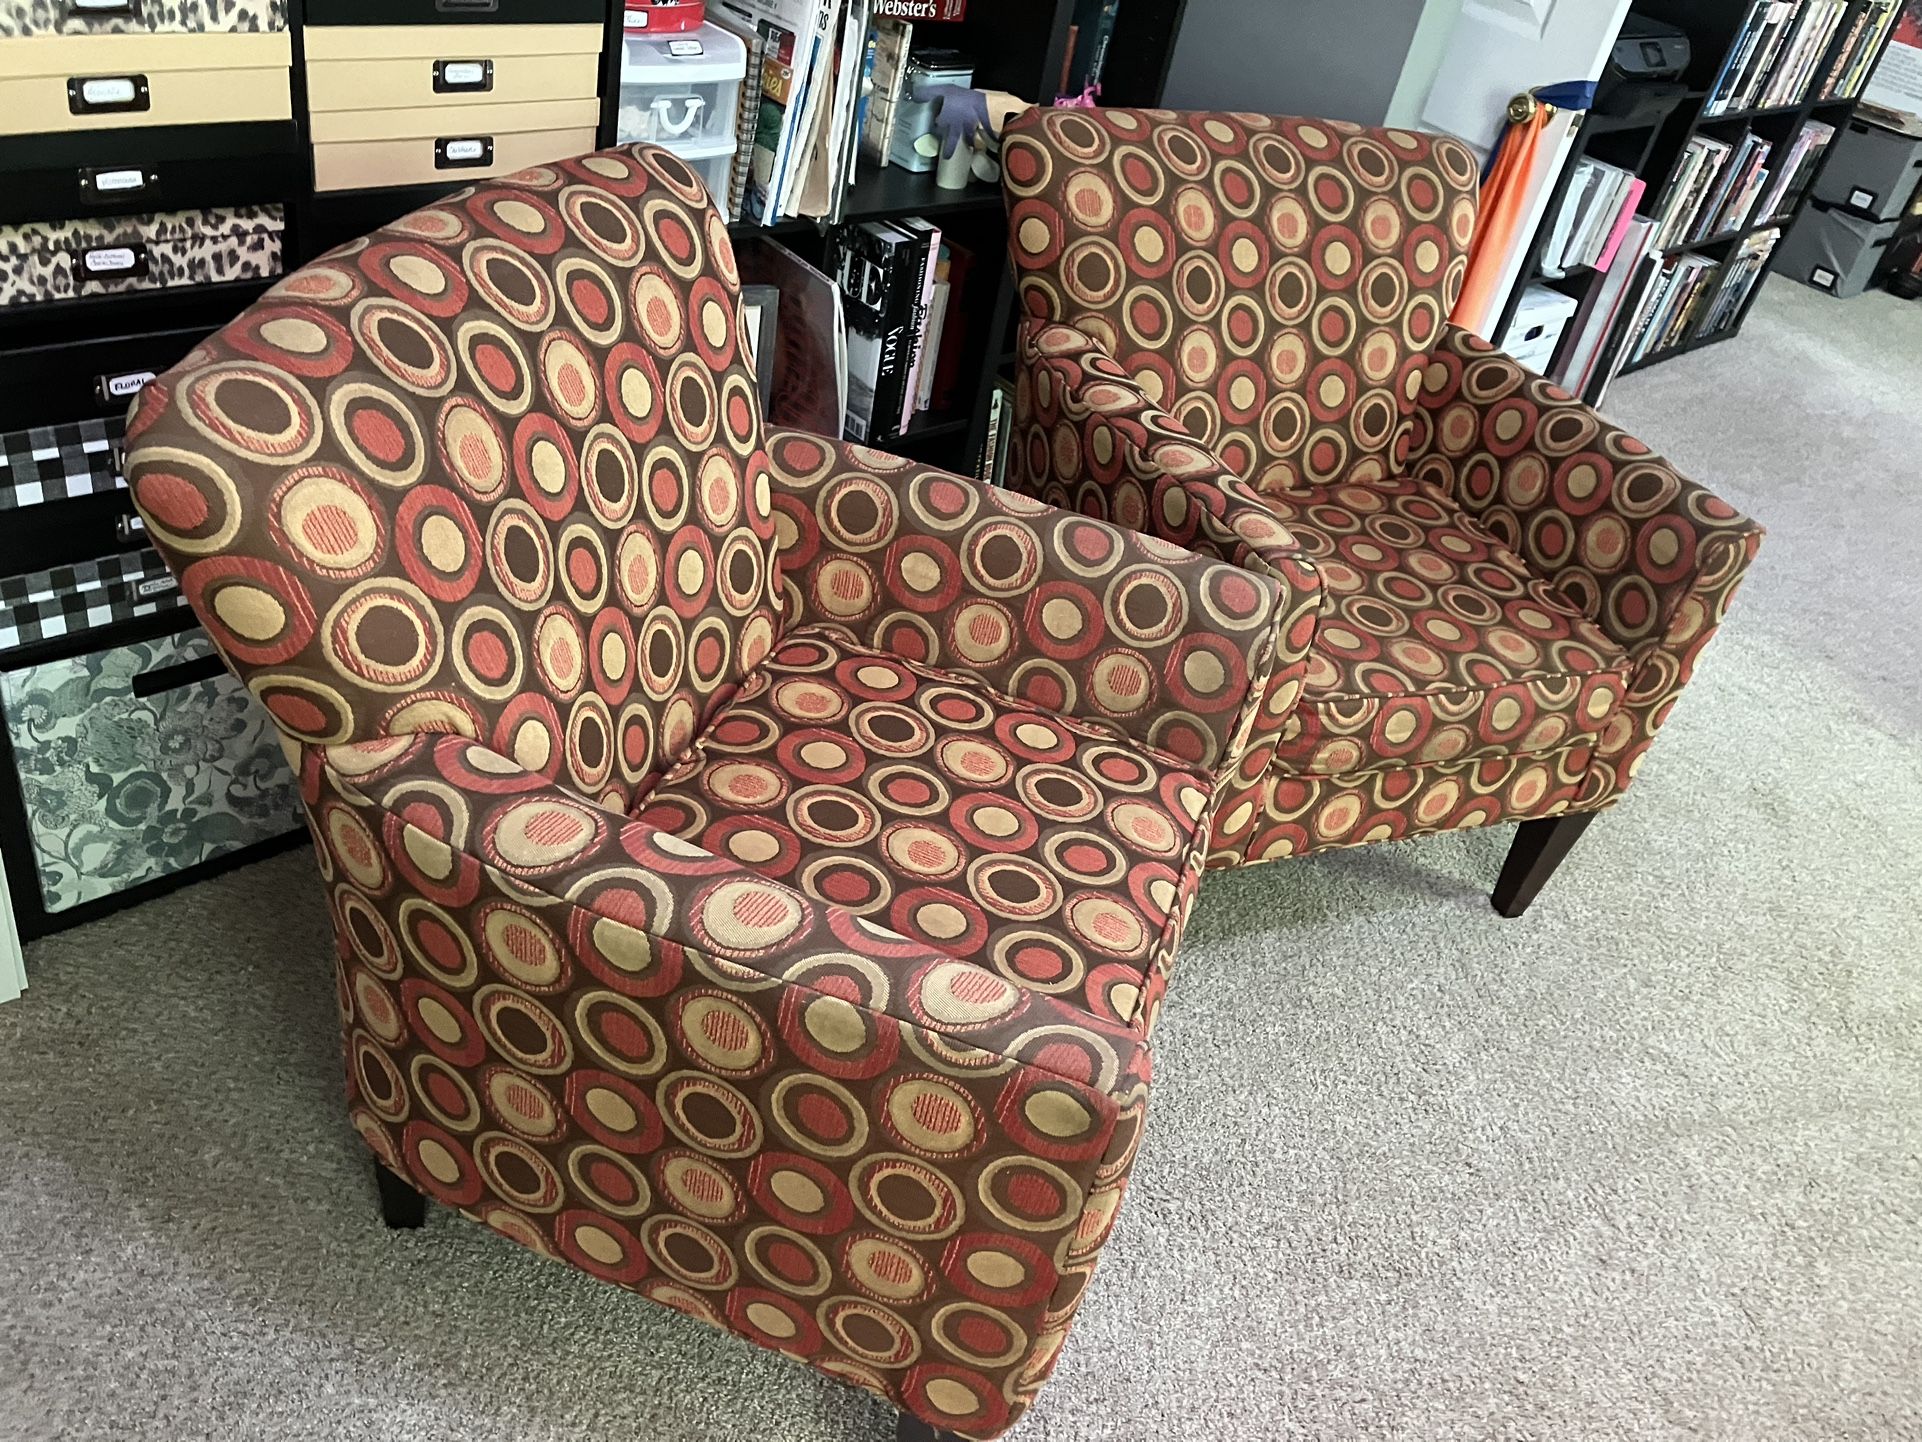 Matching chairs